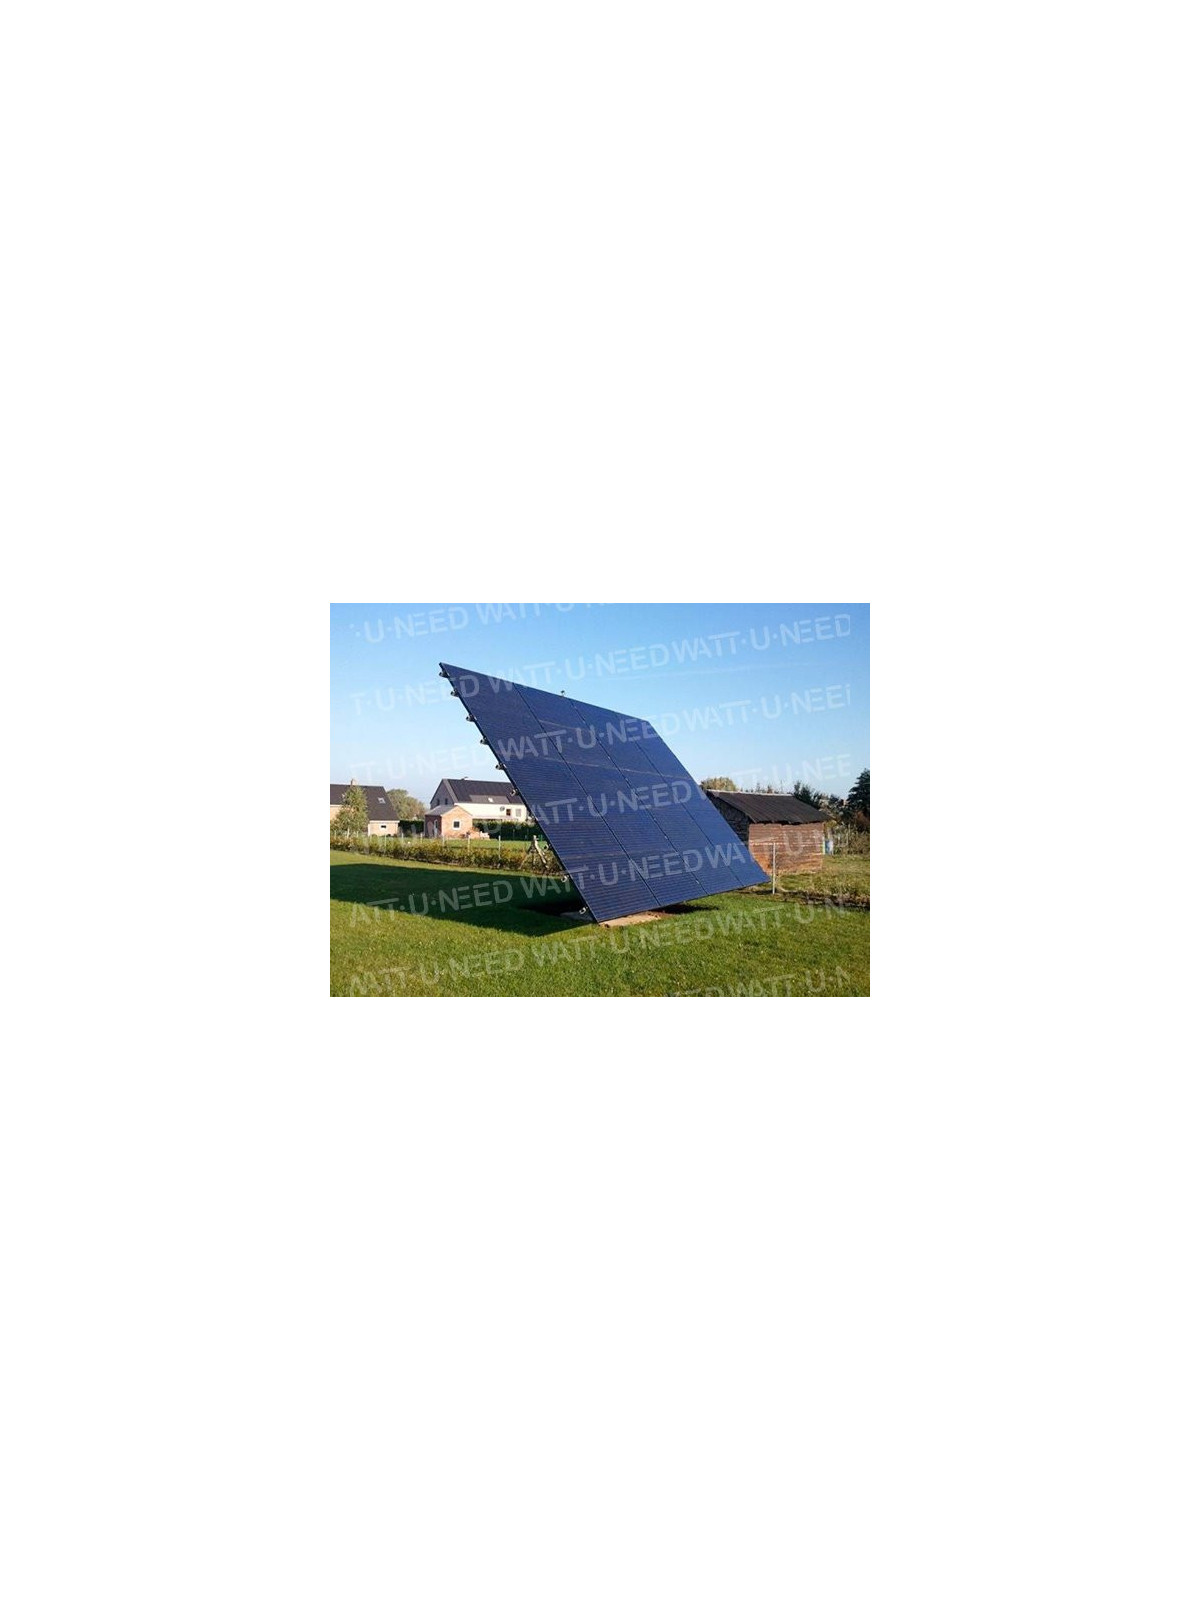 Rastreador Fotovoltaico 2 ejes 20 paneles